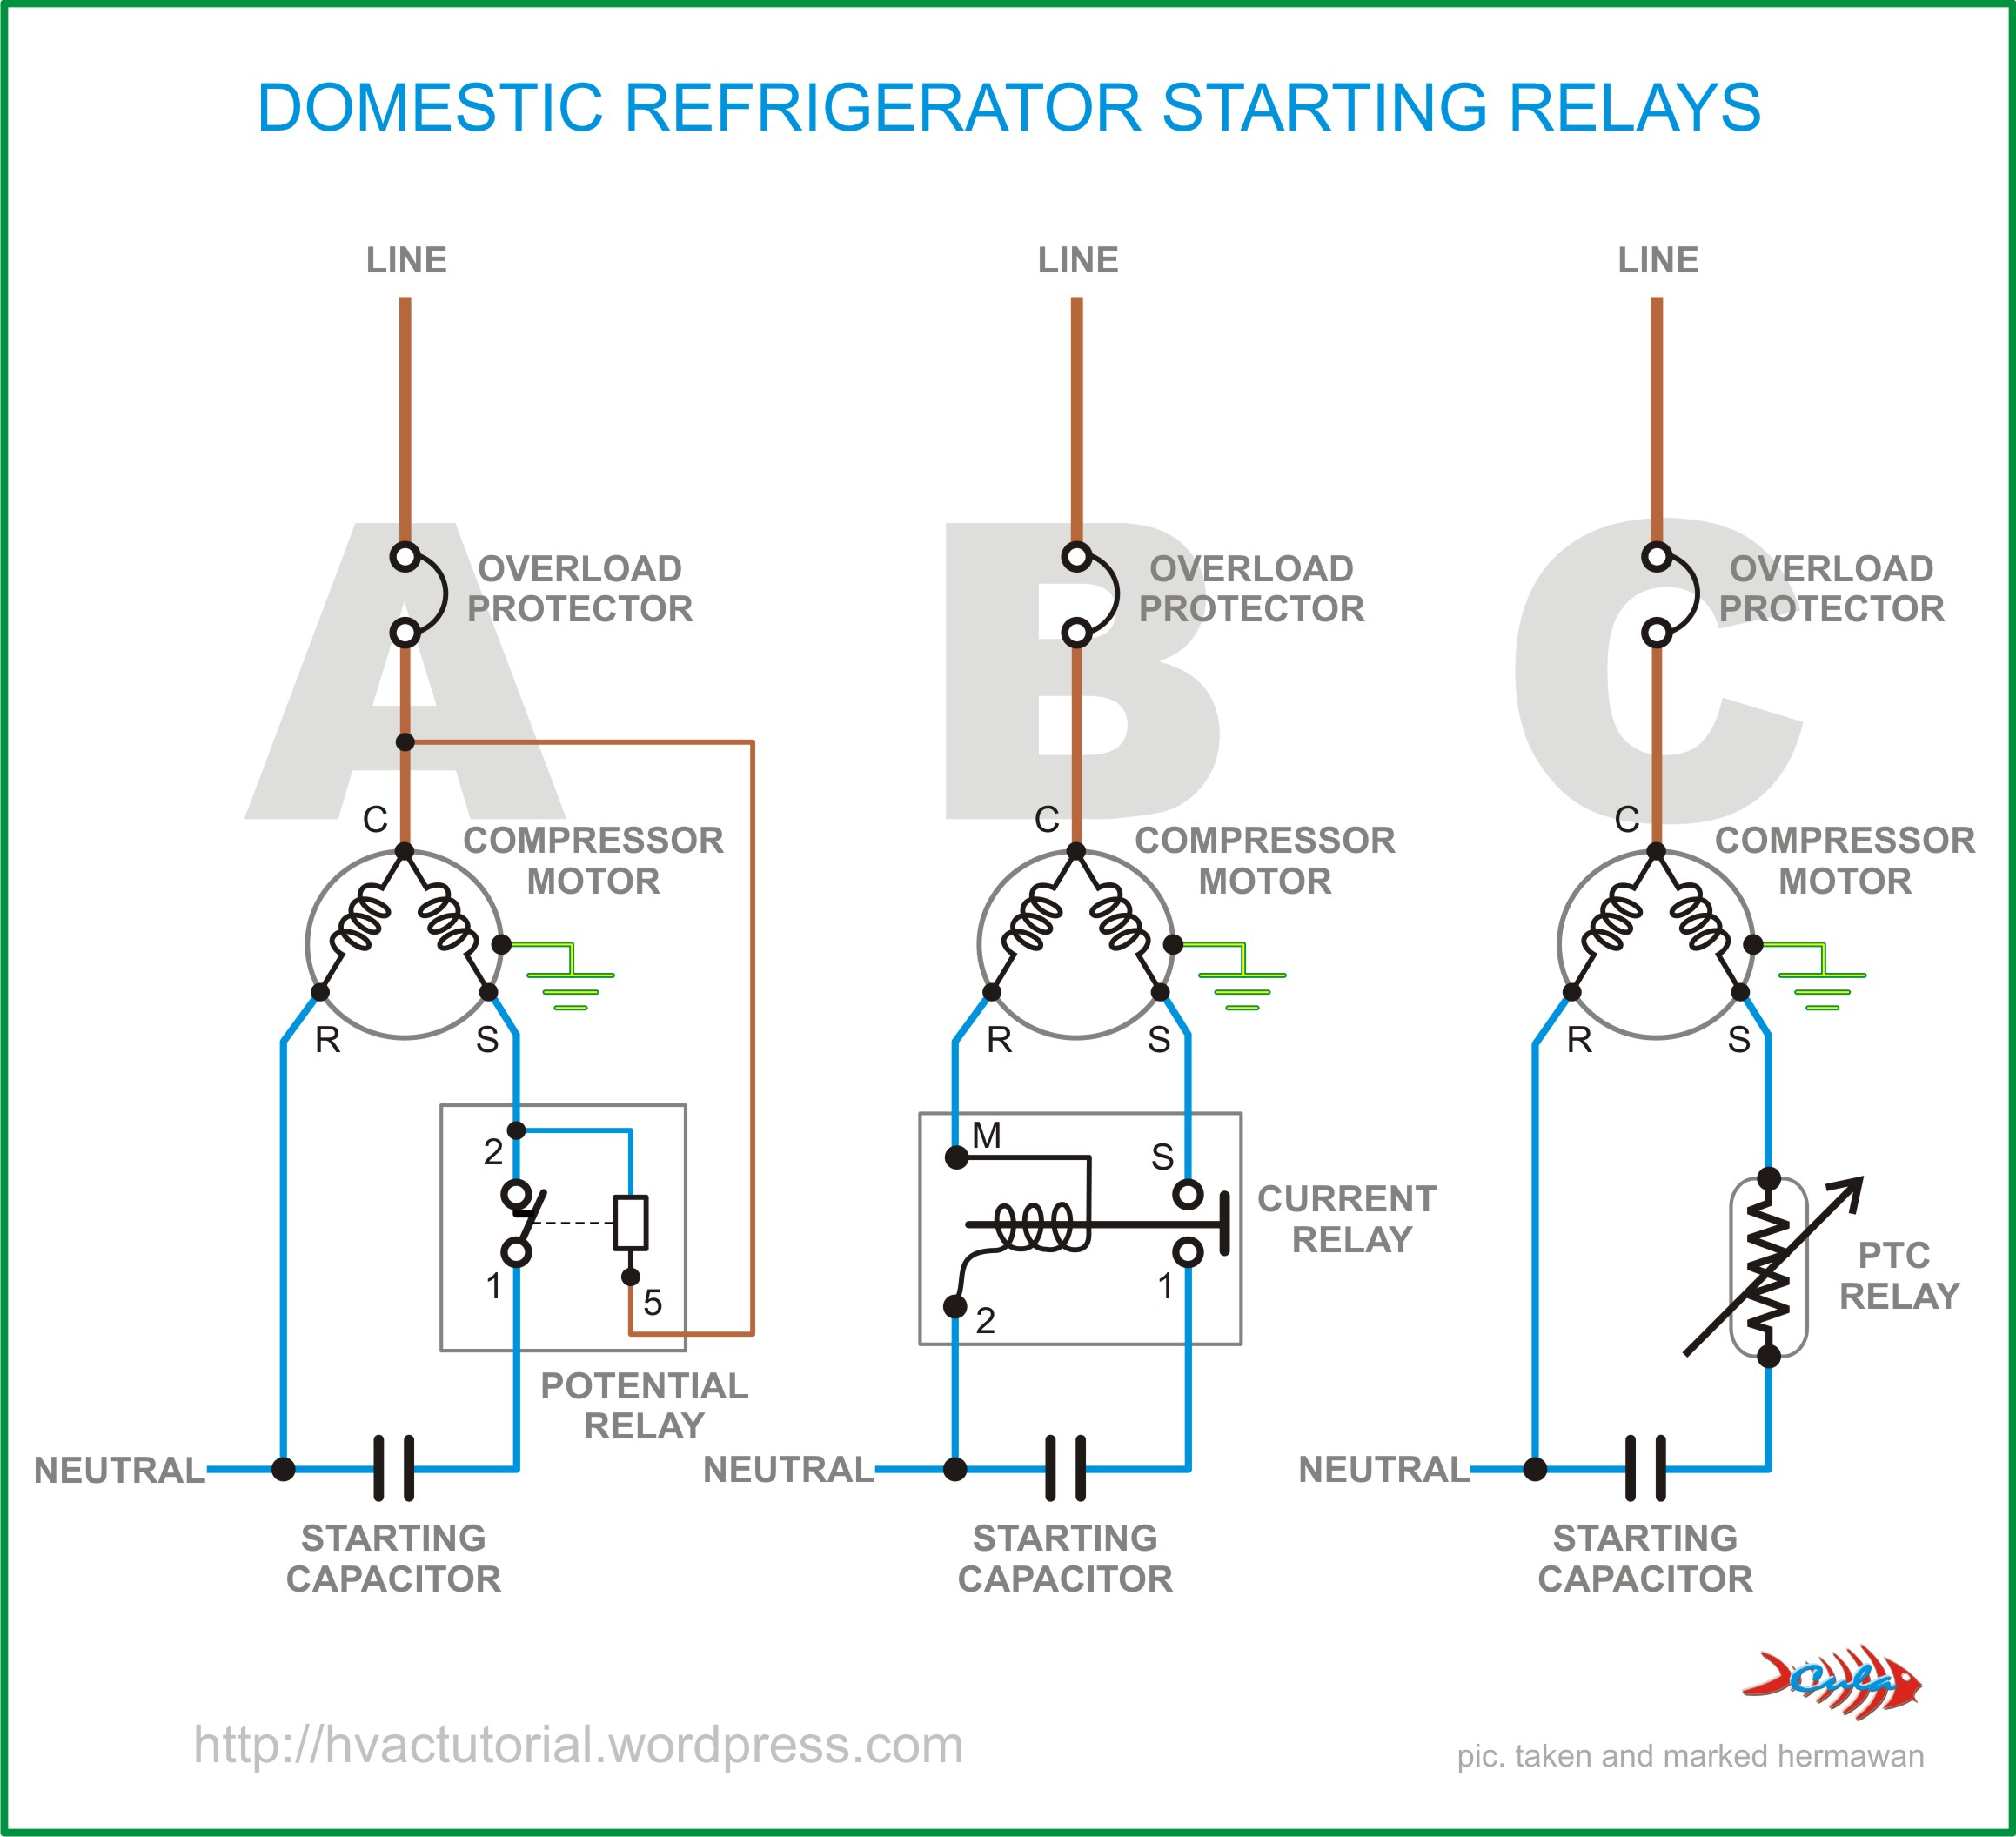 Domestic Refrigerator Starting Relays | Hermawan's Blog - Refrigerator Start Relay Wiring Diagram